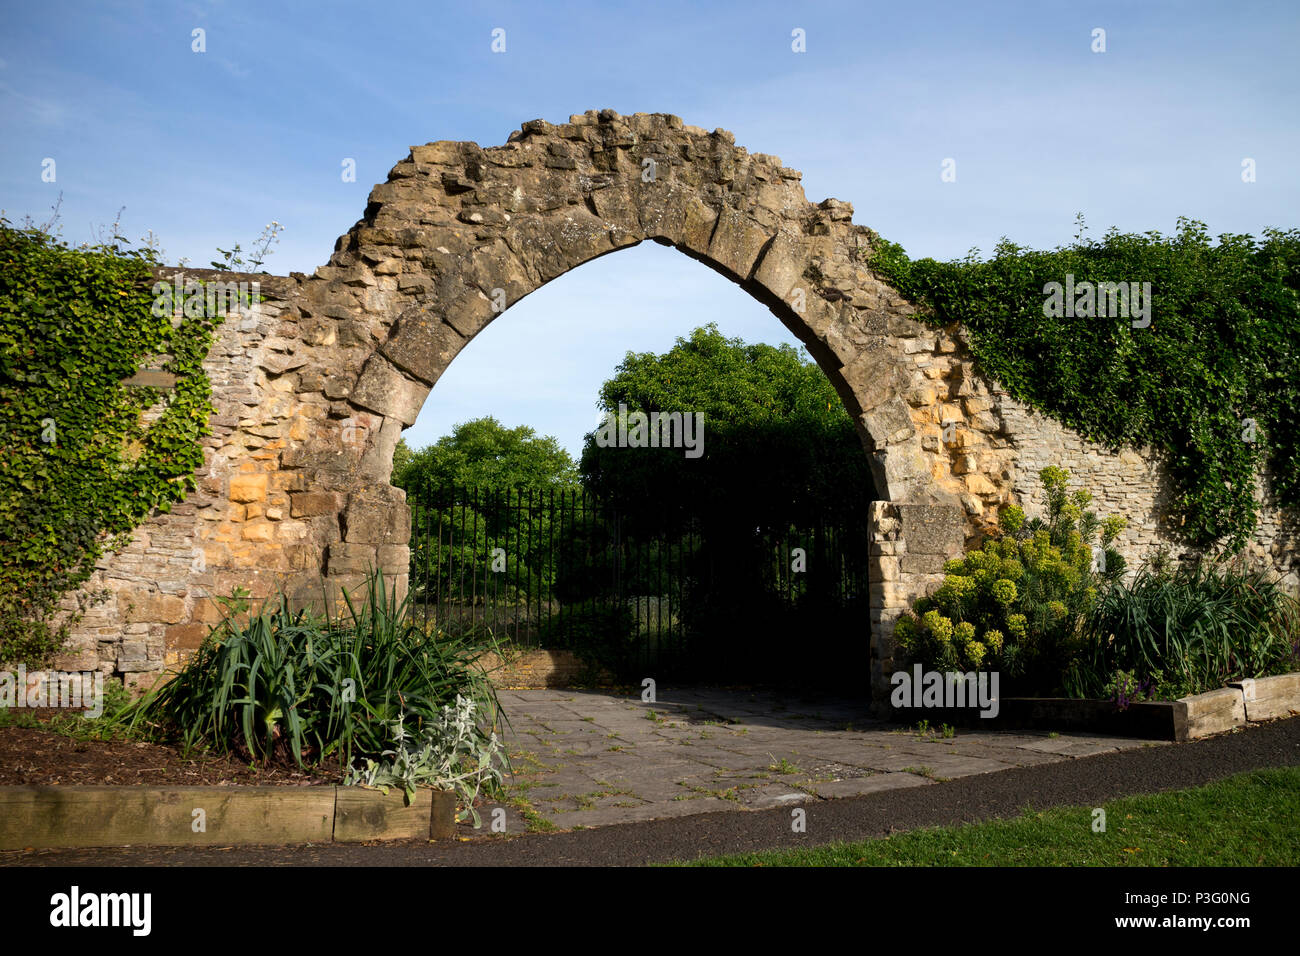 Stone archway of ruined abbey in Abbey Park, Evesham, Worcestershire, England, UK Stock Photo